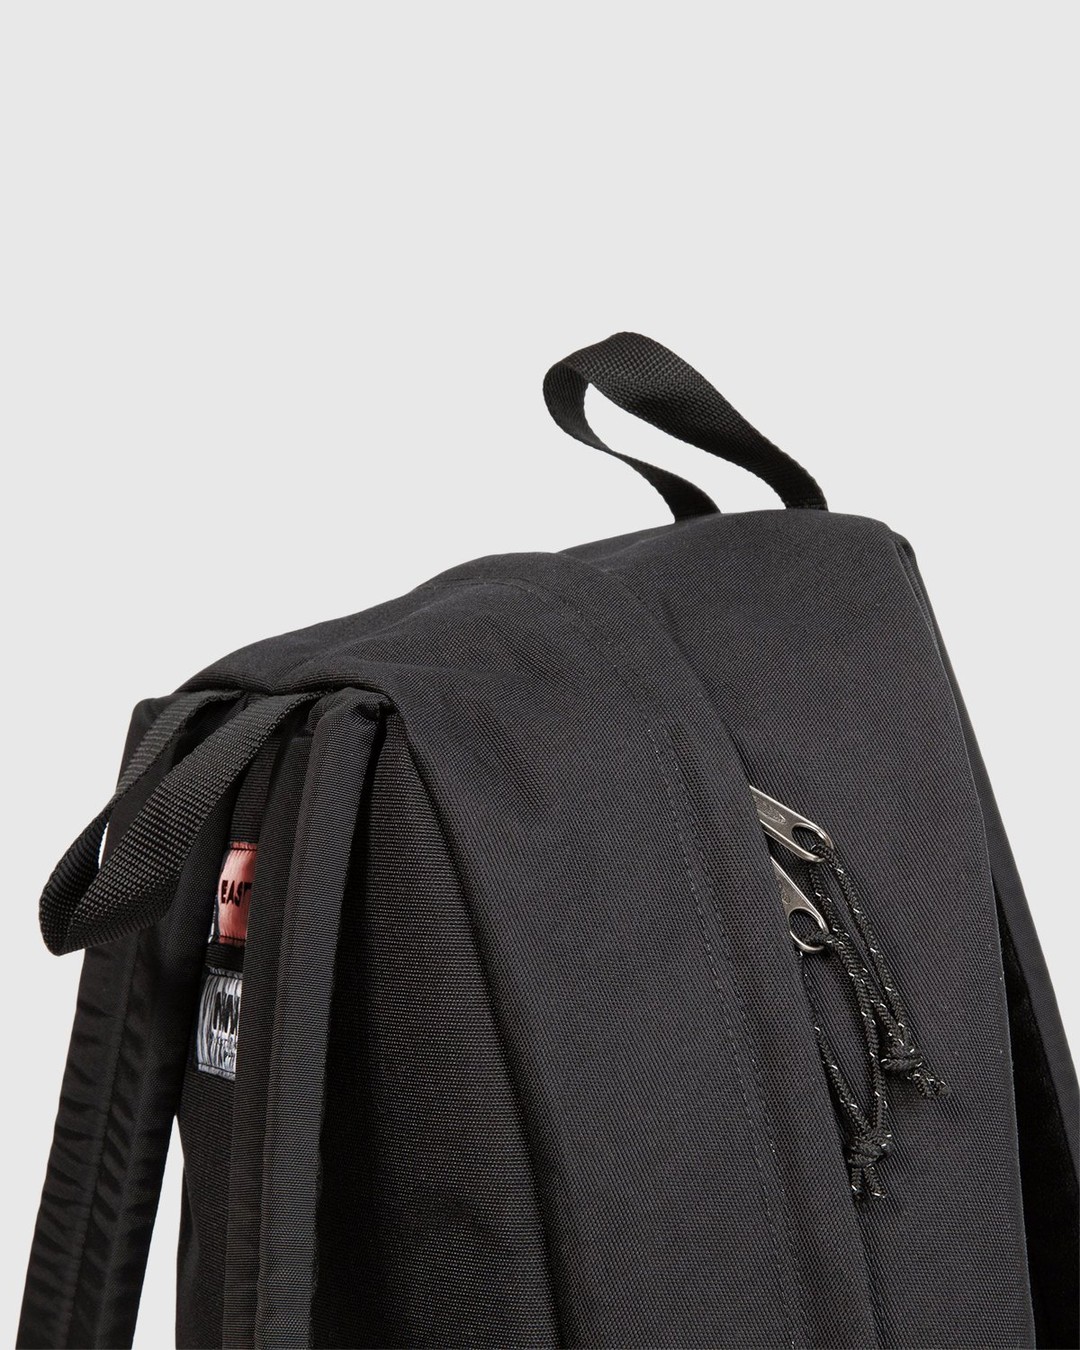 Plantkunde Aanvankelijk iets MM6 Maison Margiela x Eastpak – Padded XL Backpack Black | Highsnobiety Shop